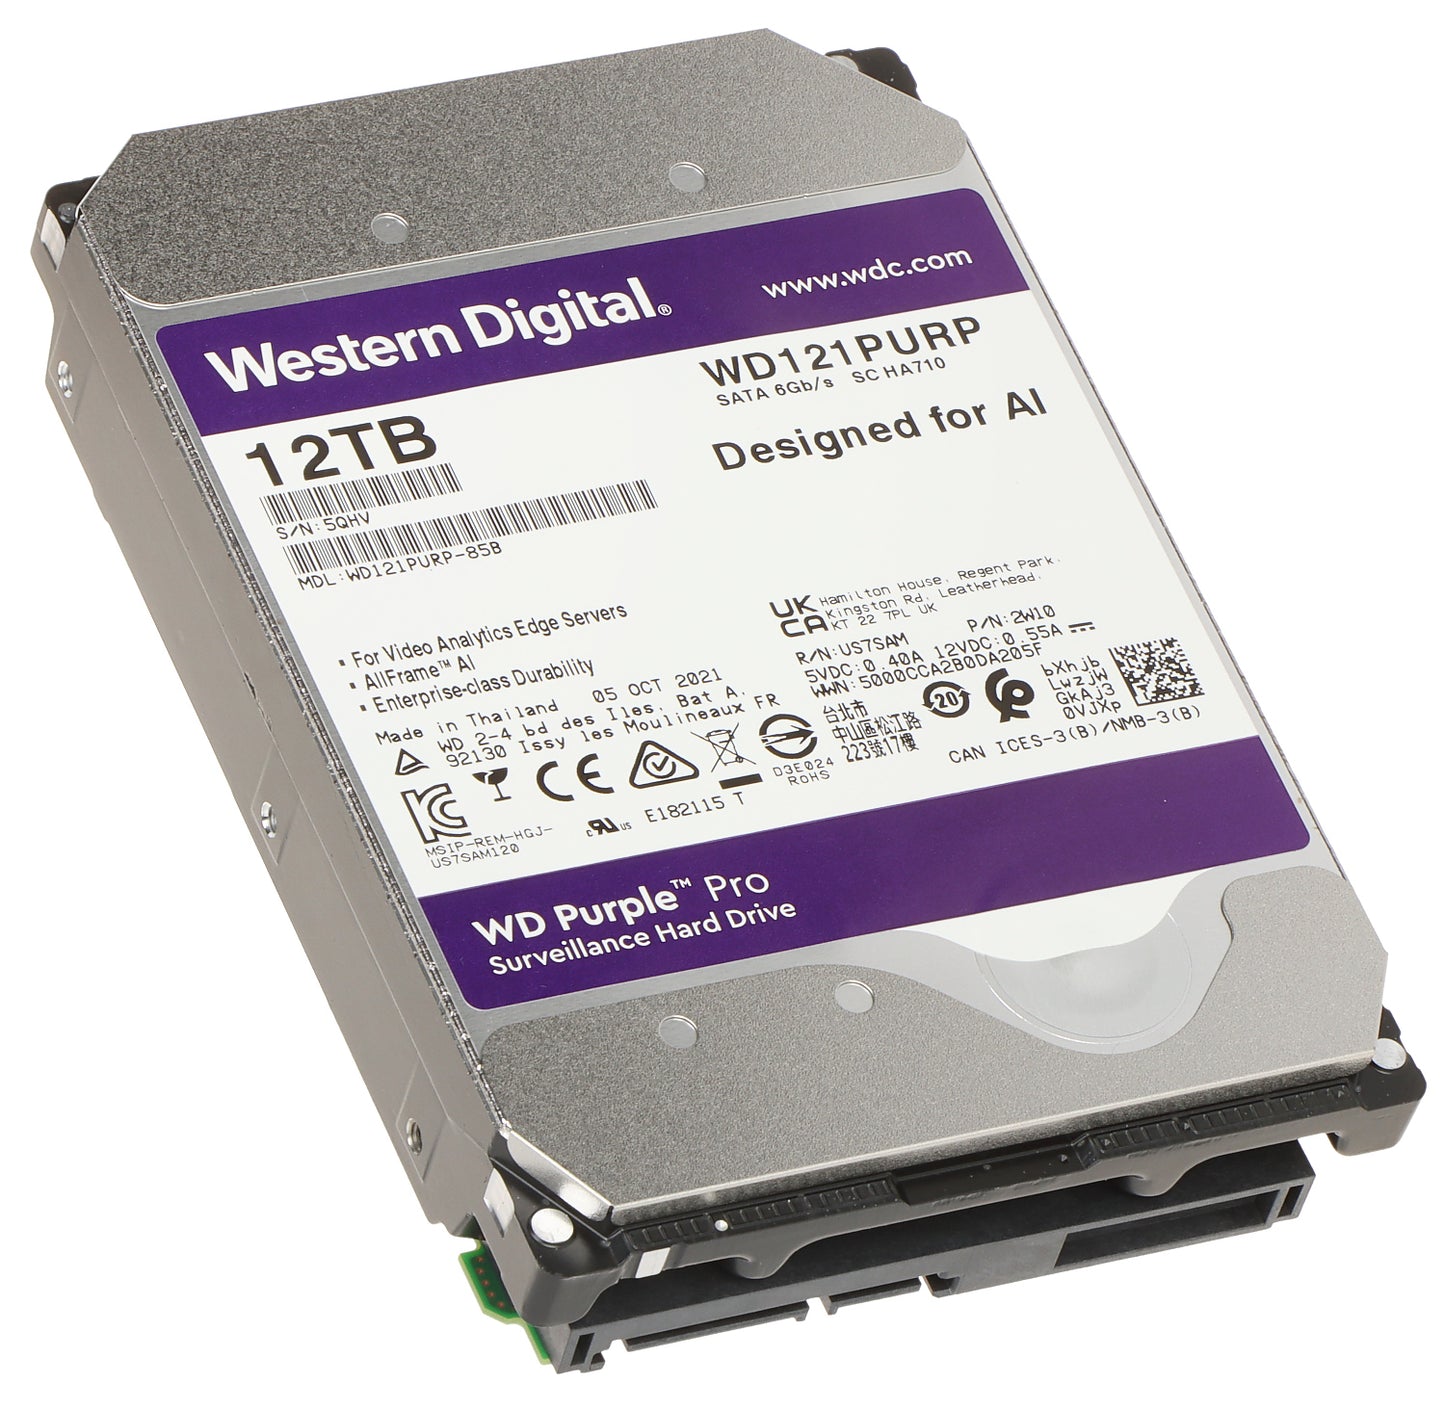 Western Digital HD WD121PURP 12TB 3.5 SATA 256MB AV WD Purple Pro Bulk